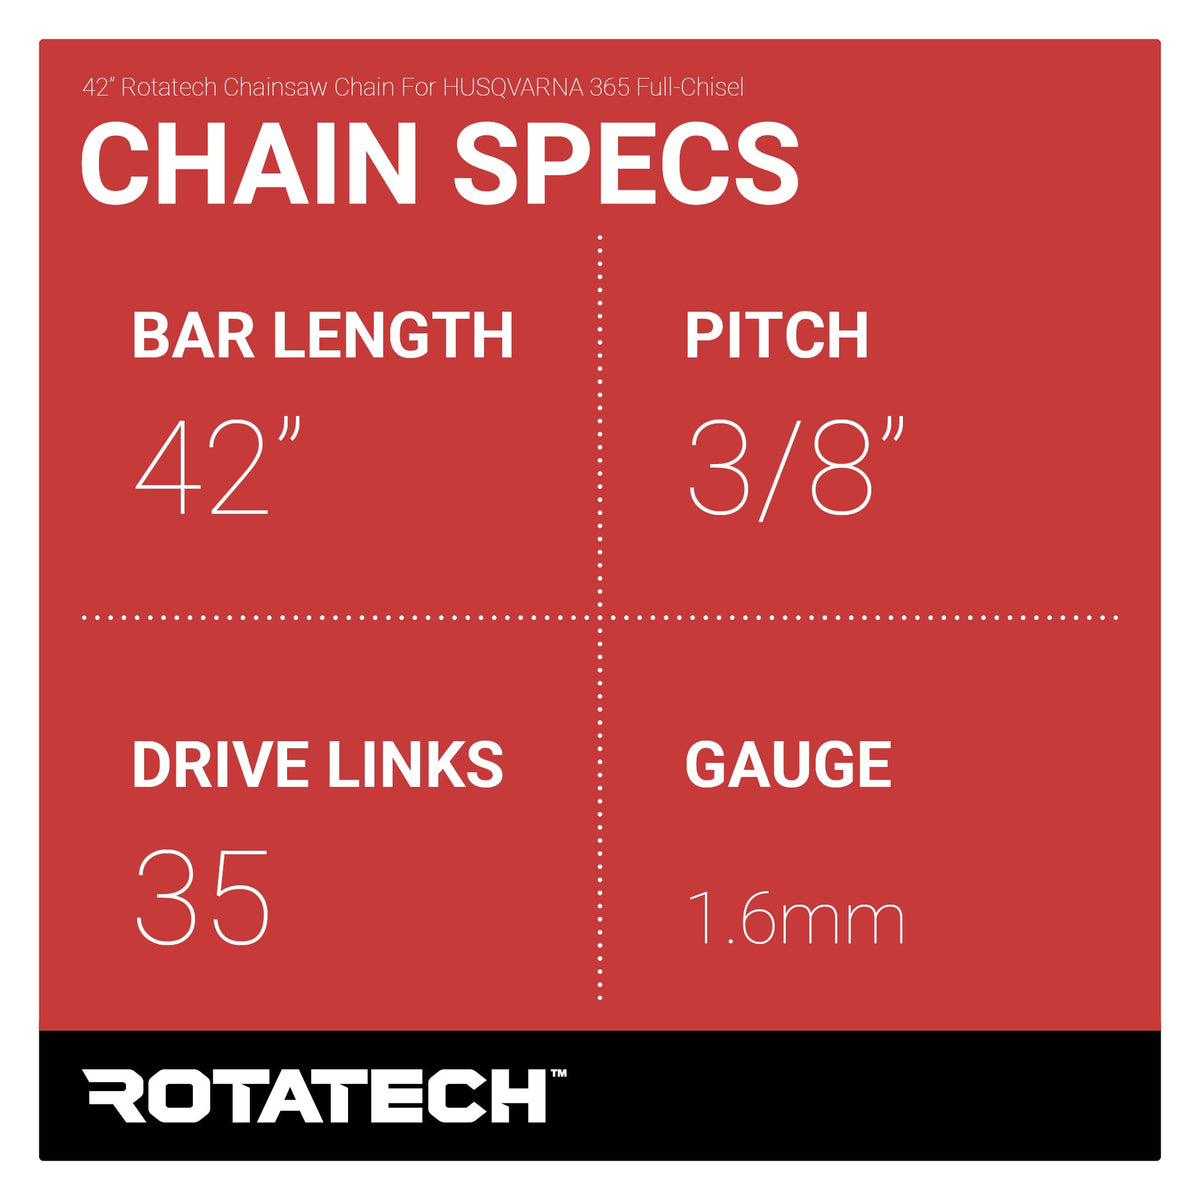 42" Rotatech Chainsaw Chain For HUSQVARNA 365 Full-Chisel Chain Specs